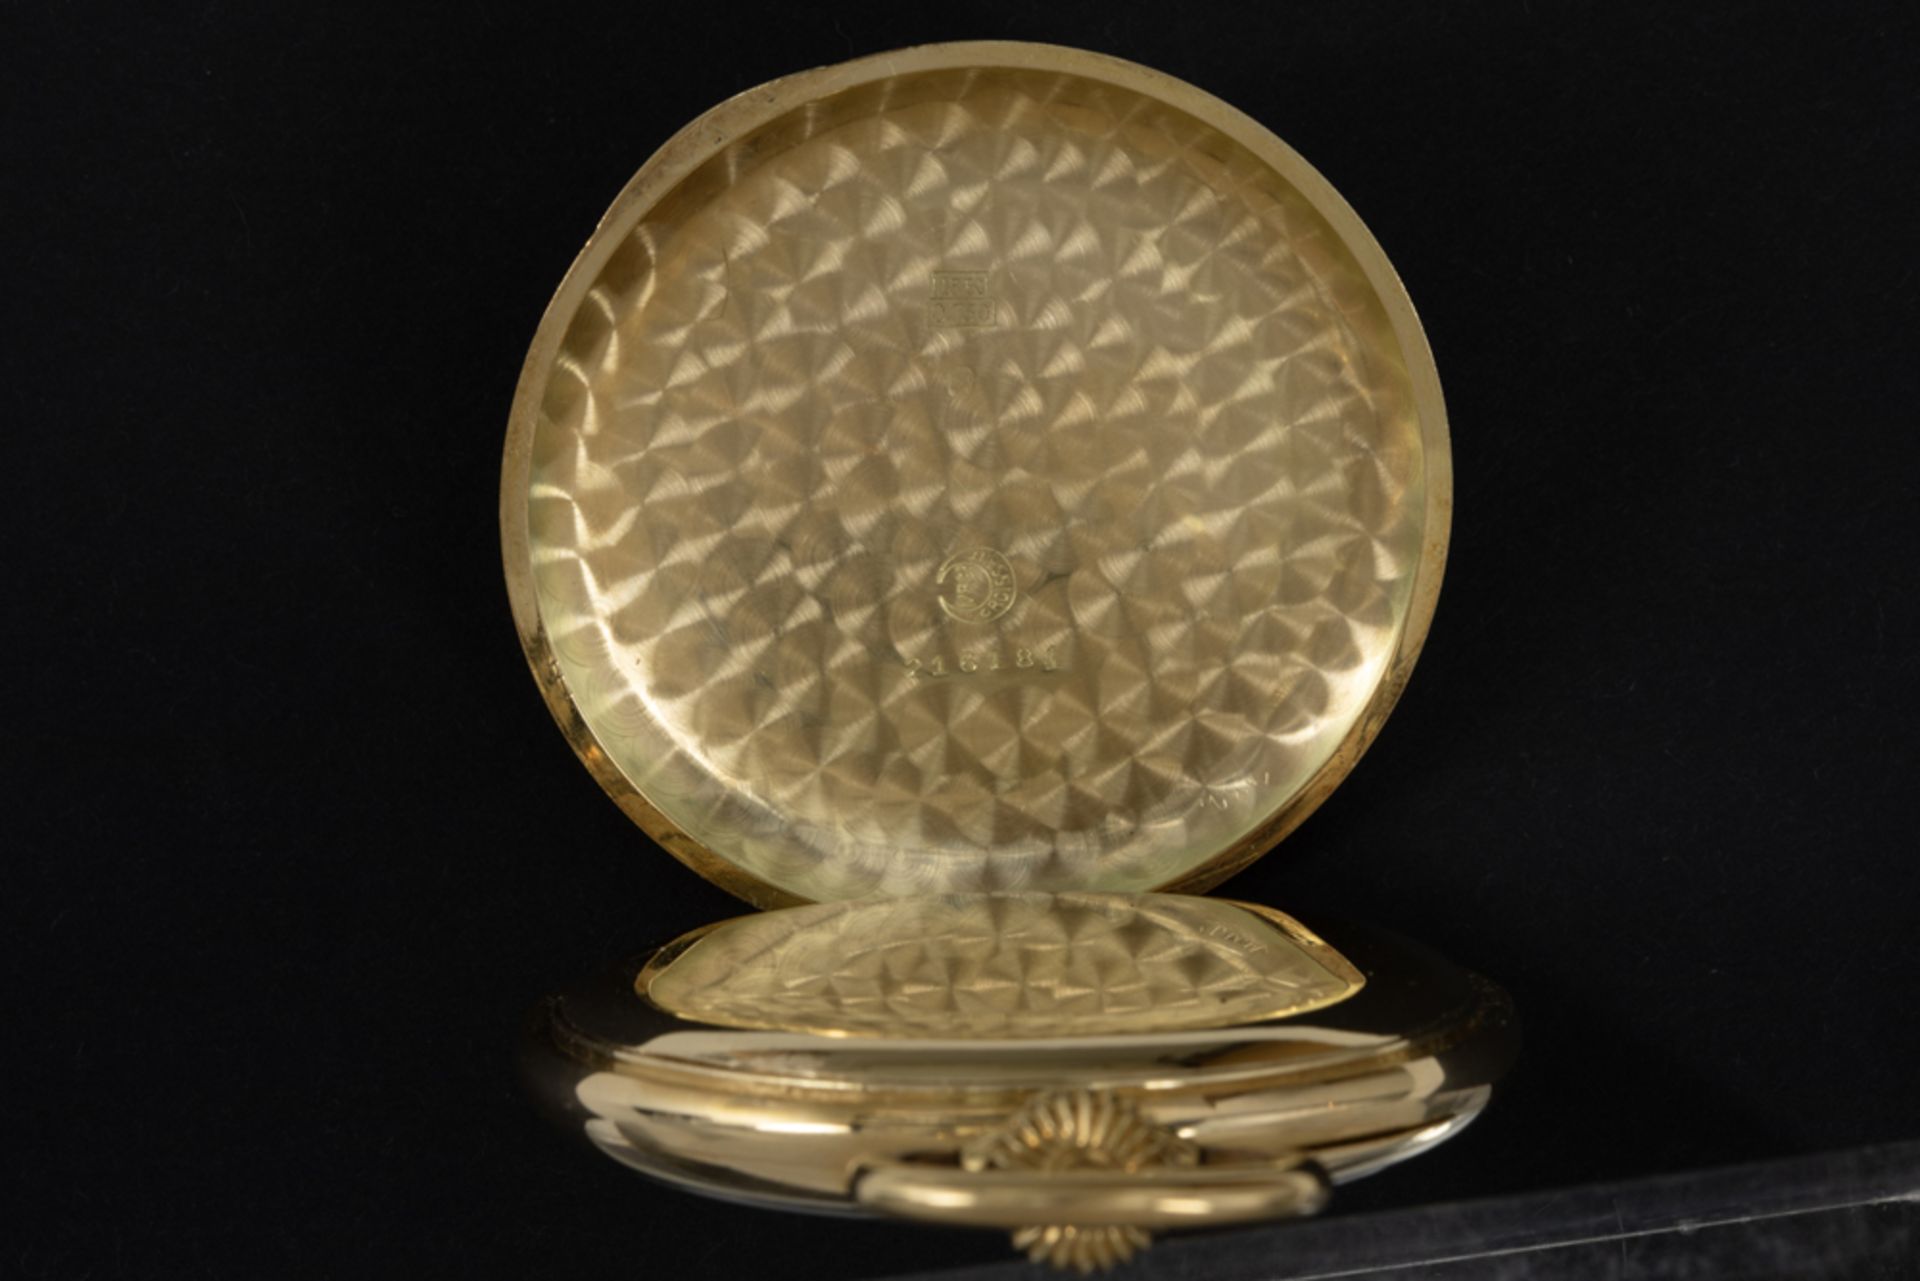 Chronomètre Croissant marked Art Deco pocket watch with its case in yellow gold (18 carat) || - Bild 4 aus 4